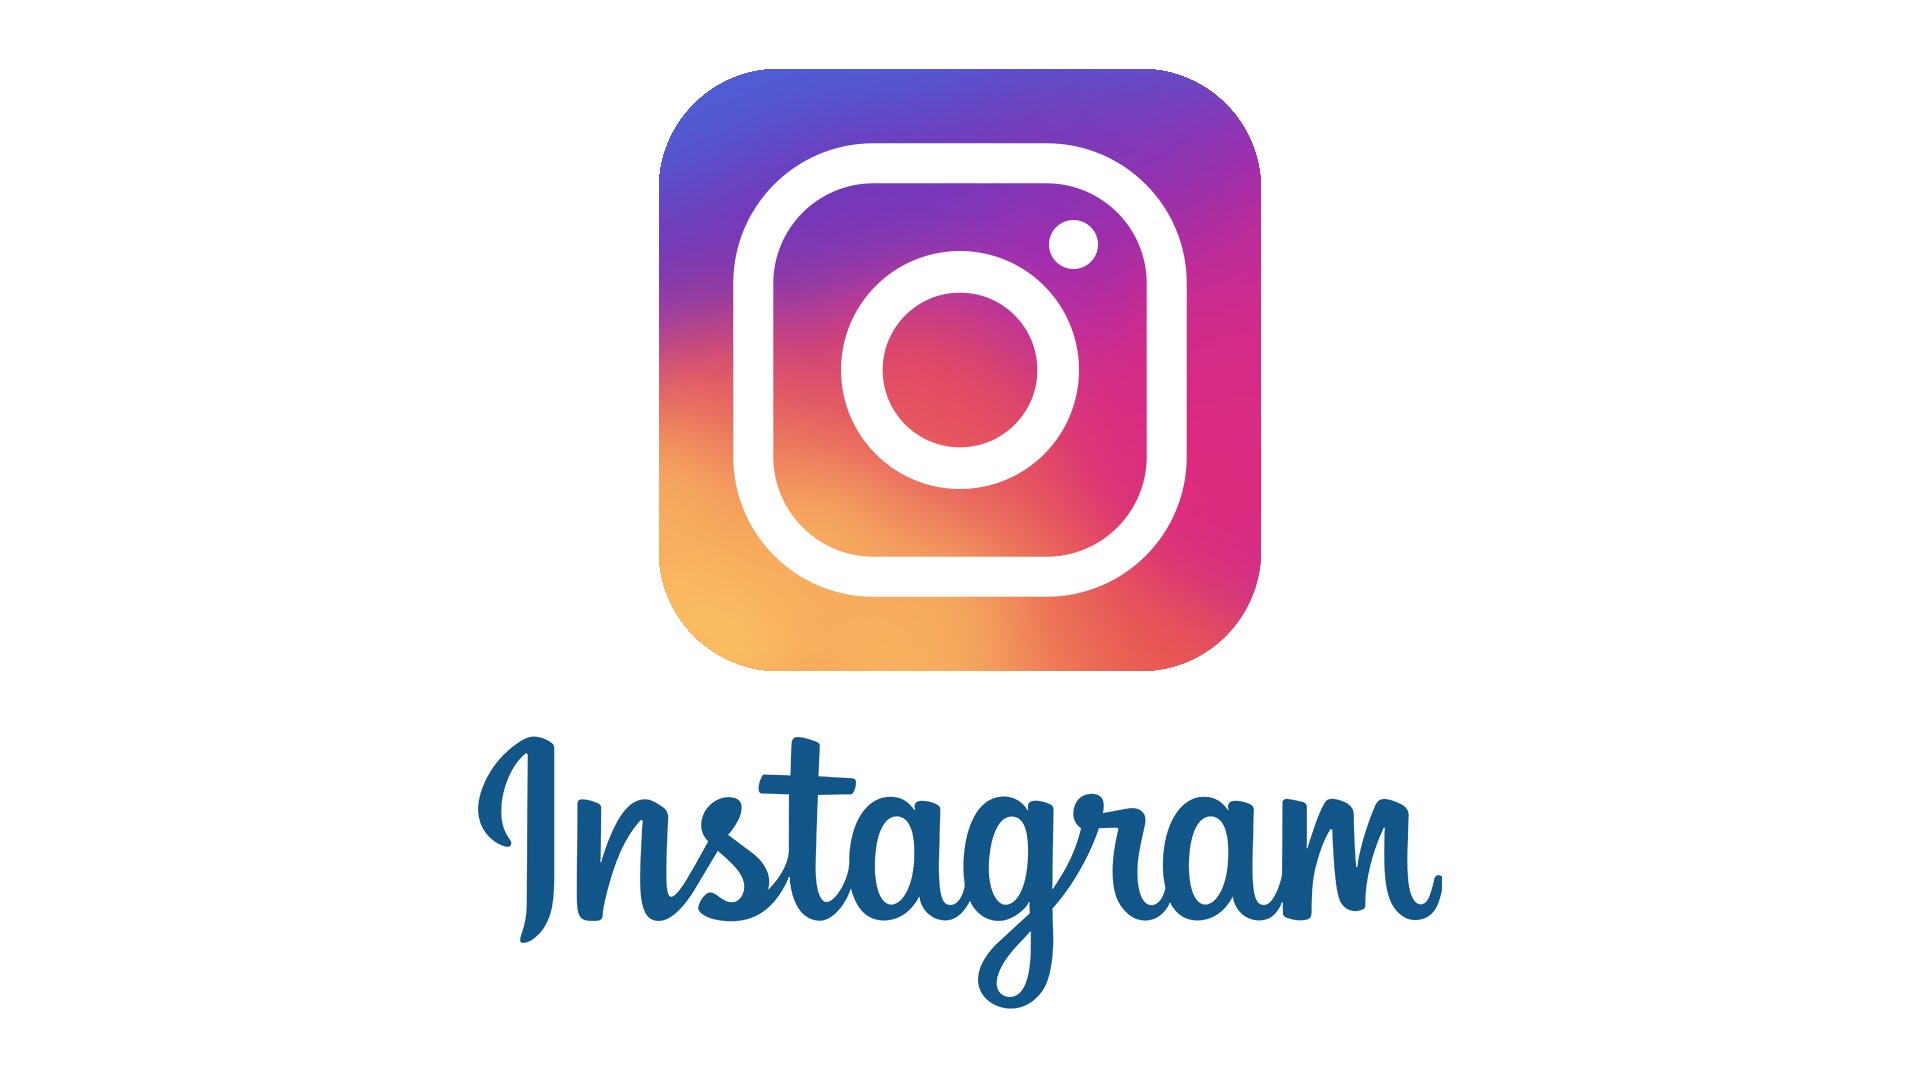 100,000 Instagram live Vector Images | Depositphotos